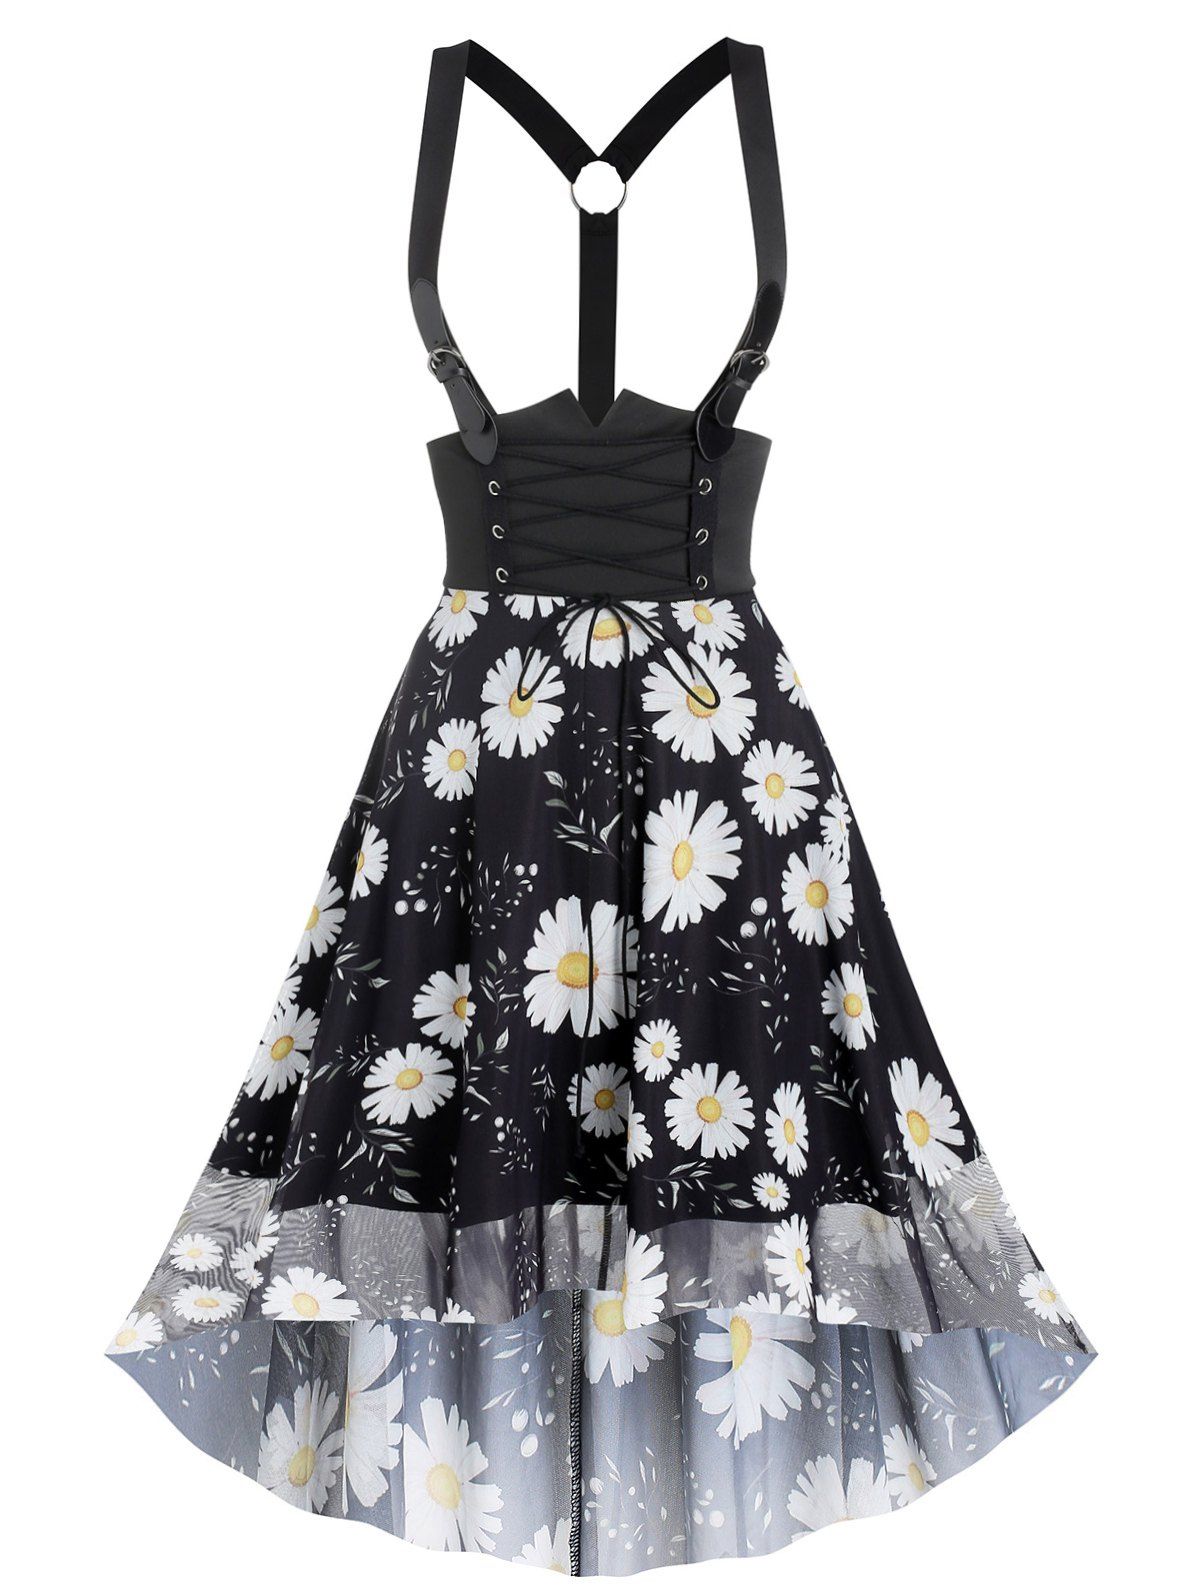 Lace Up Daisy Floral Mesh High Low Suspender Dress - BLACK M